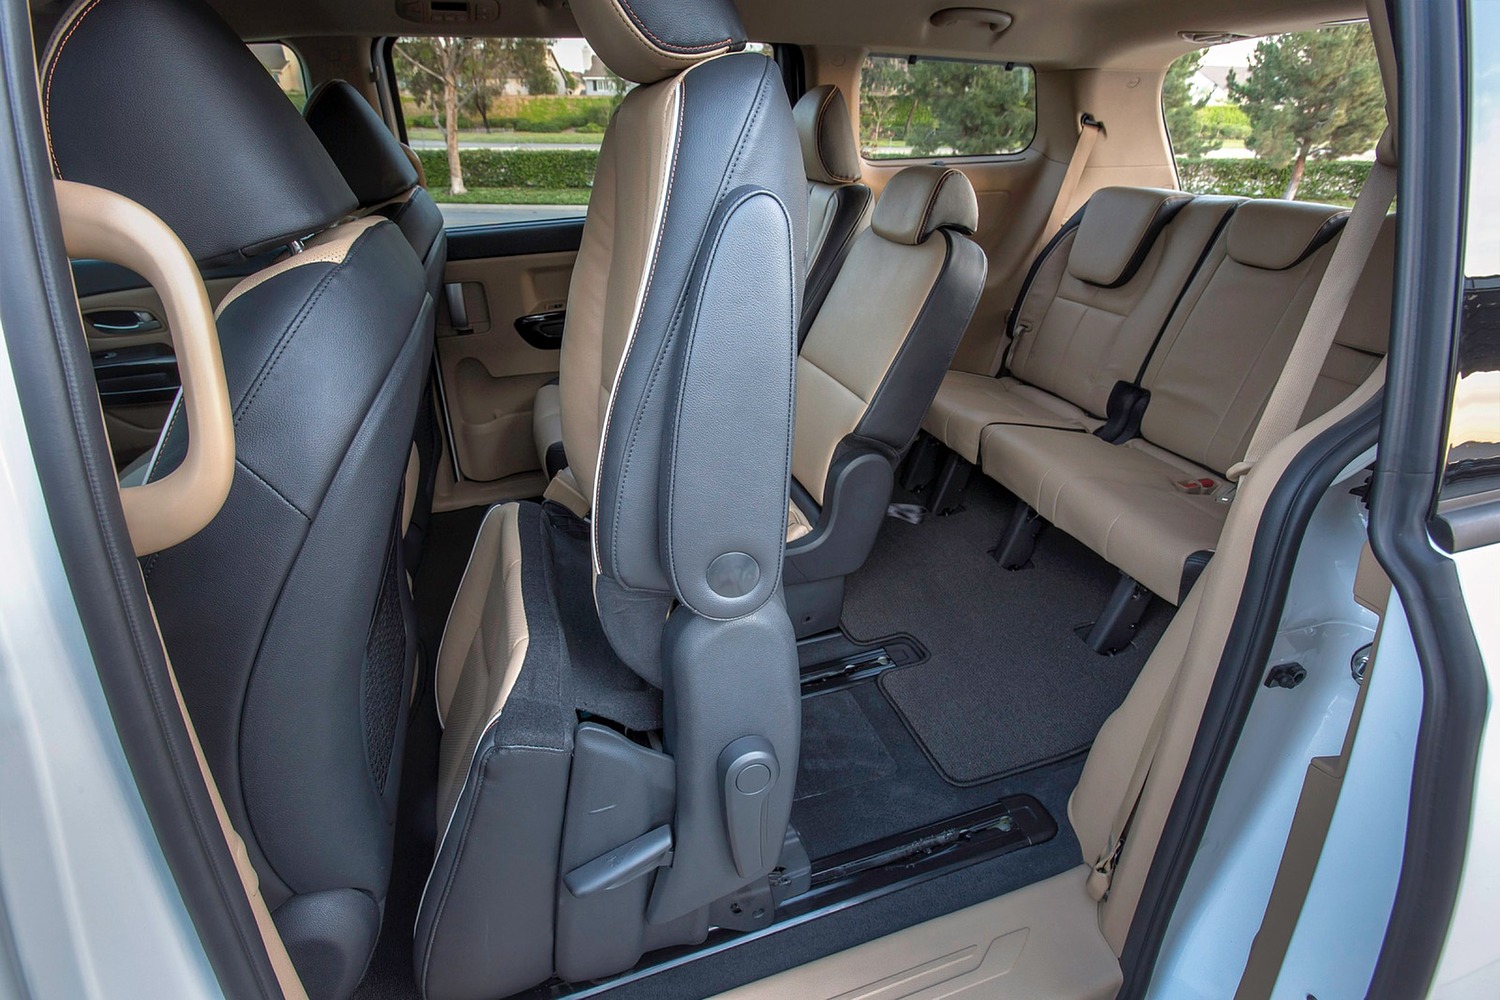 Kia Sedona SX Limited Passenger Minivan Rear Interior Shown (2016 model year shown)